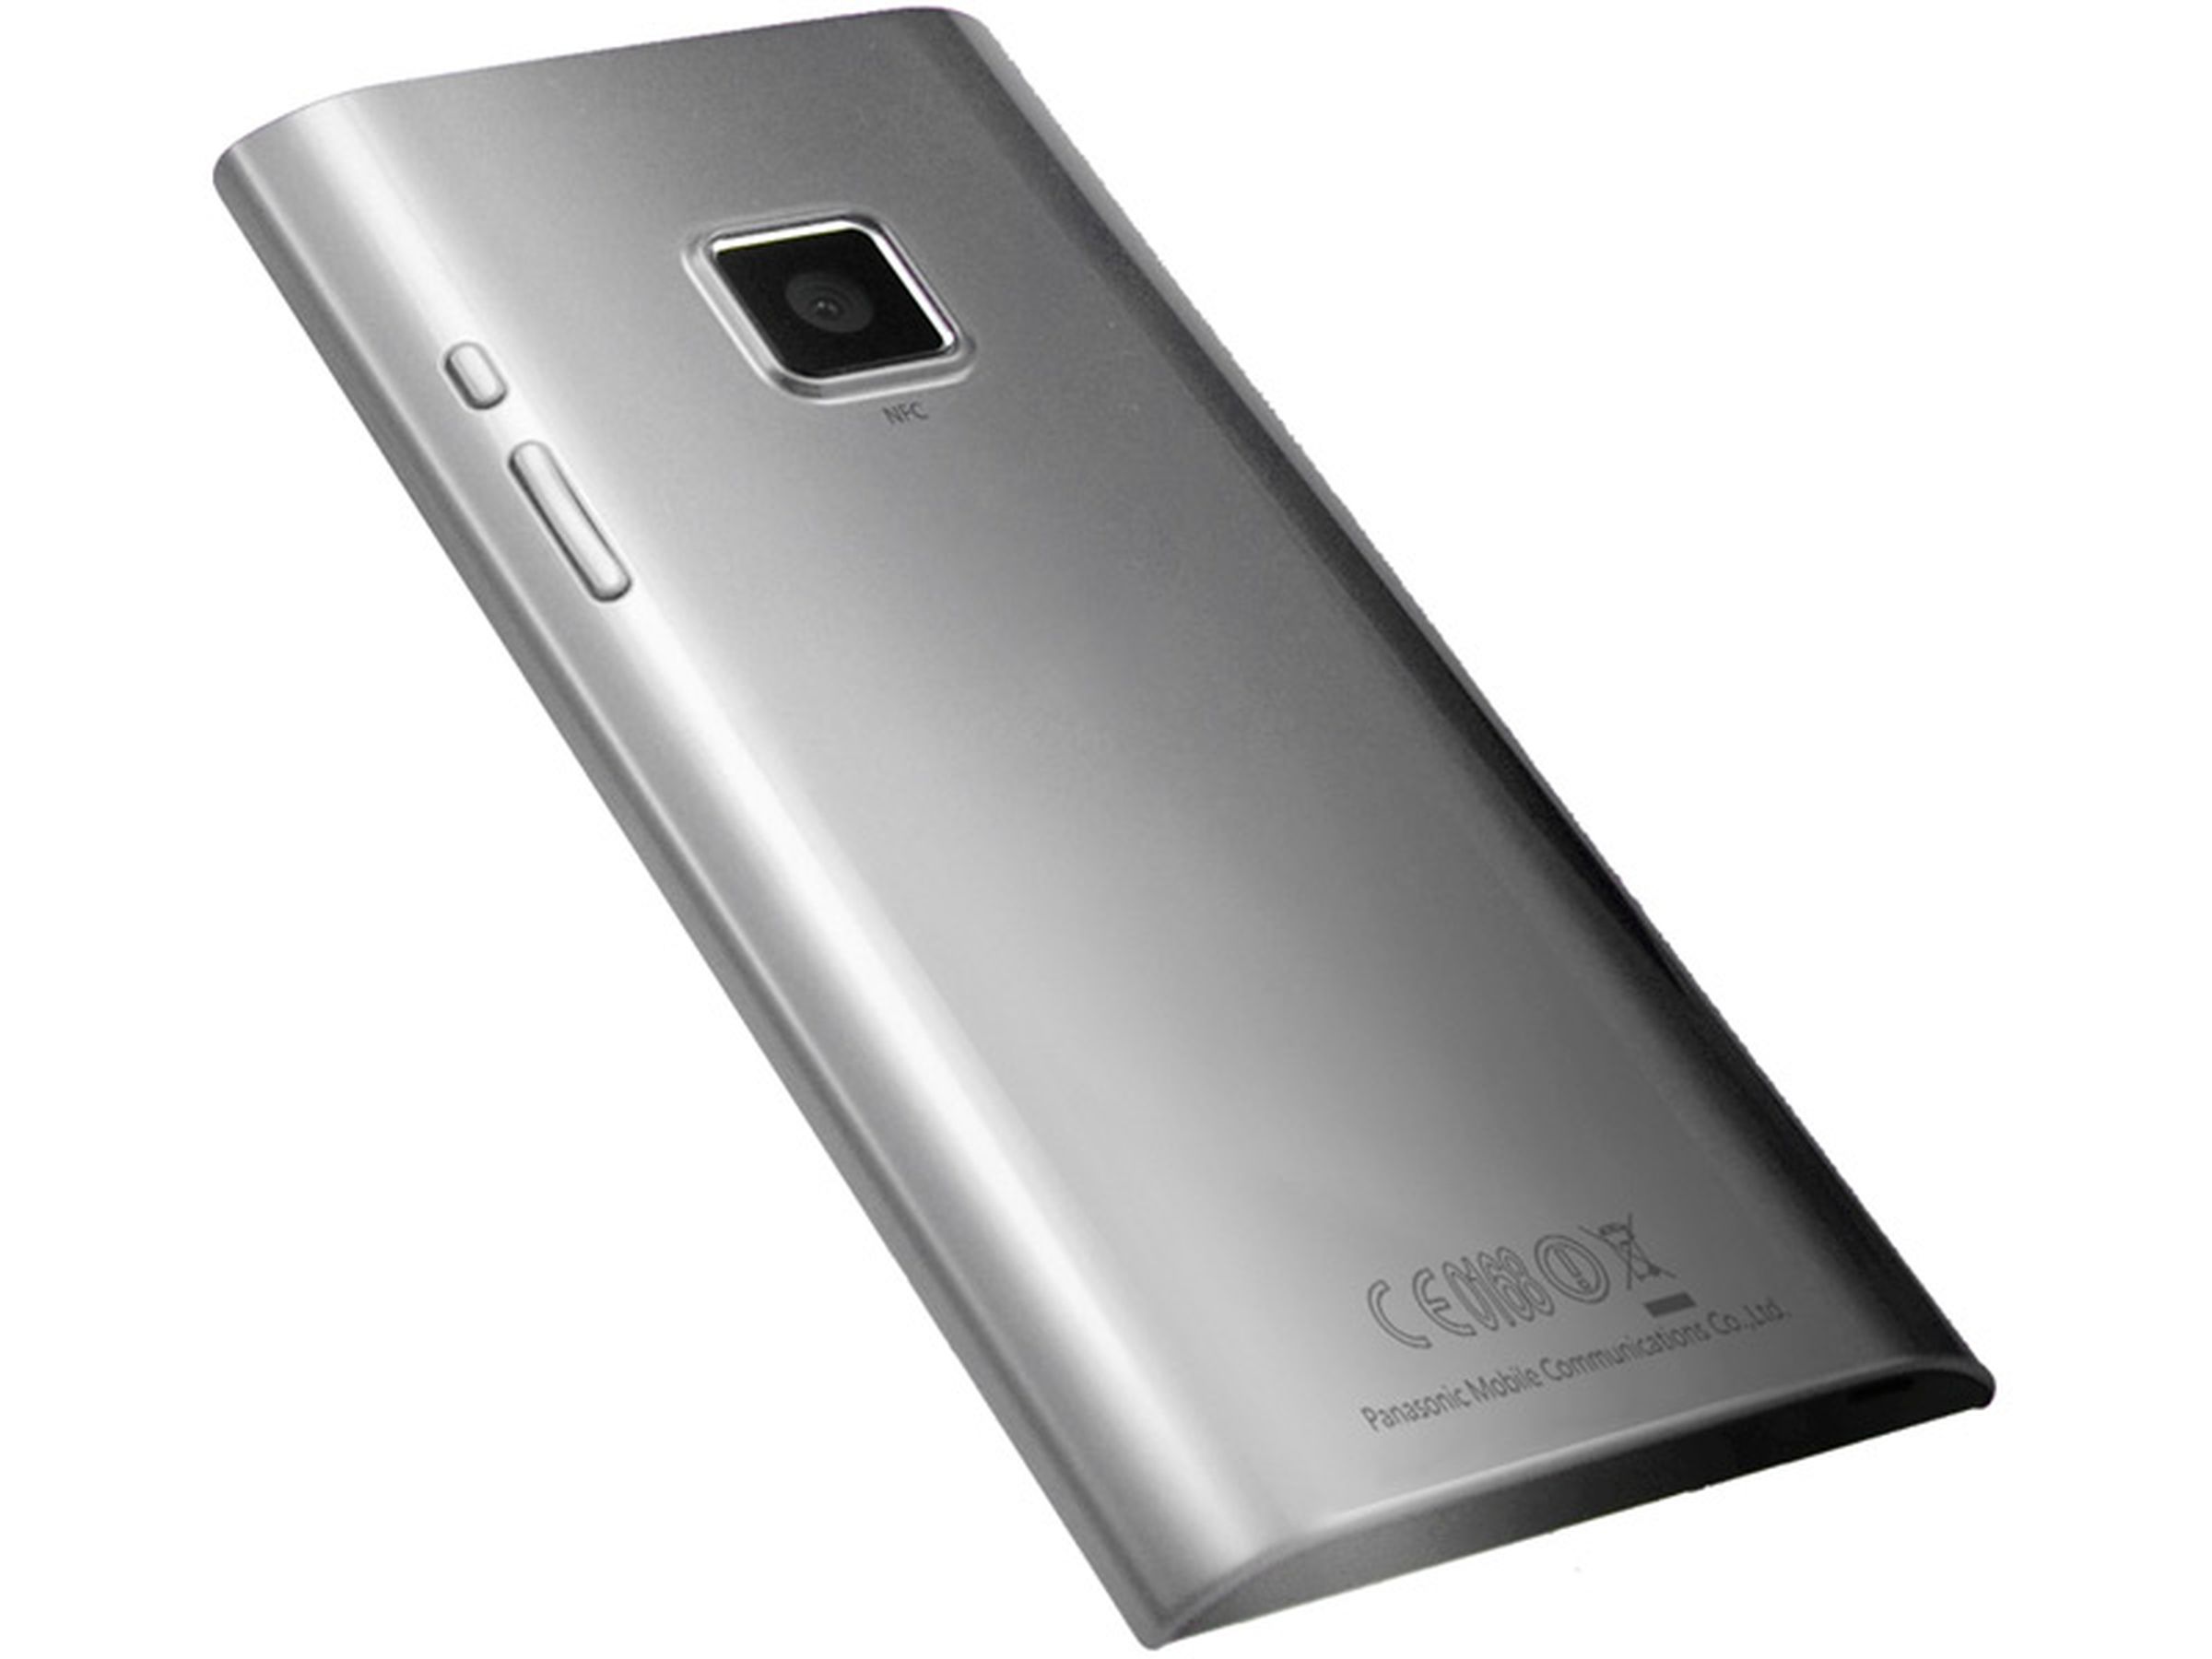 Panasonic 4.3-inch Android phone prototype